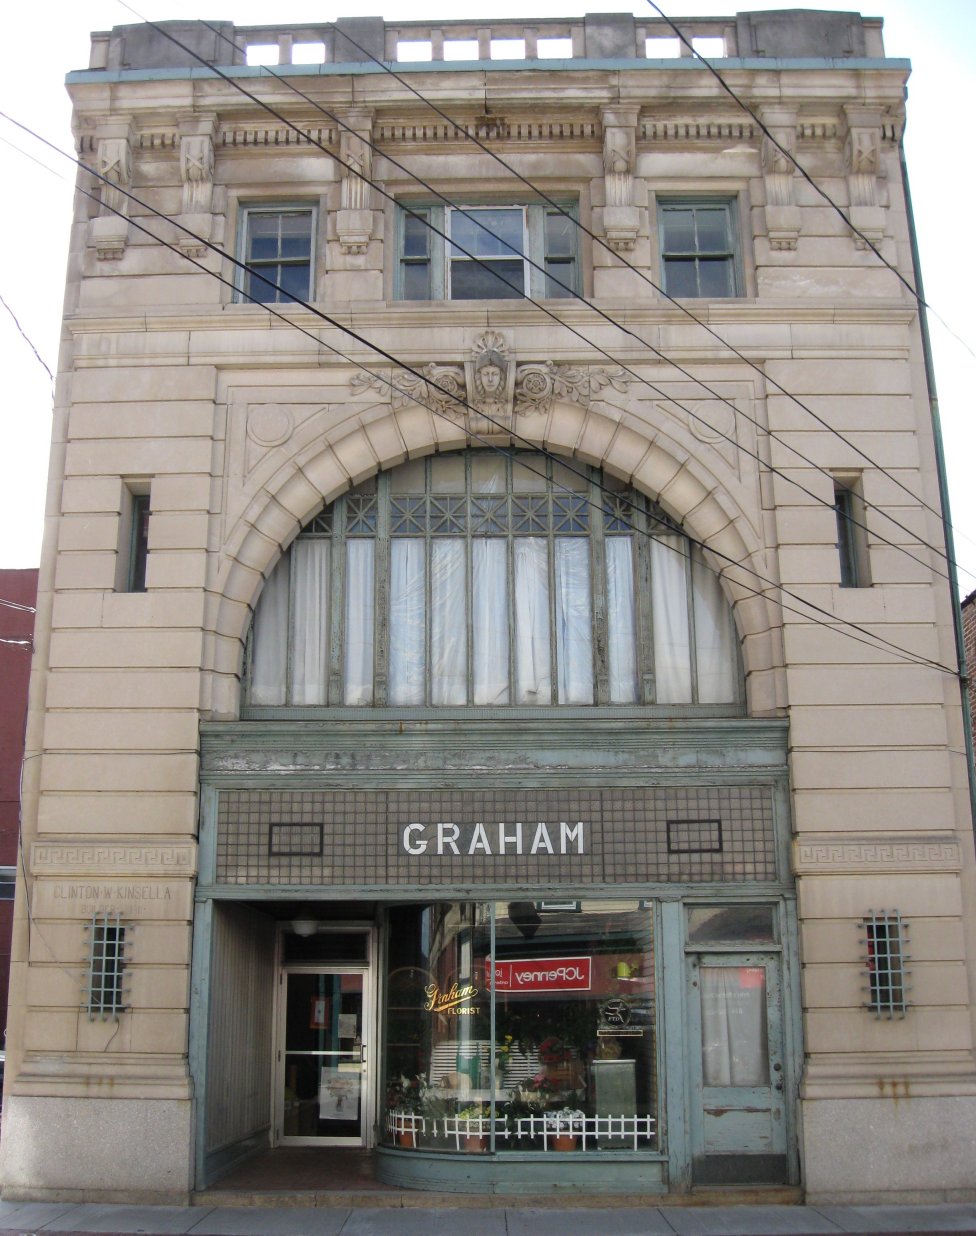 Graham's / Clinton Kinsella building, 1911